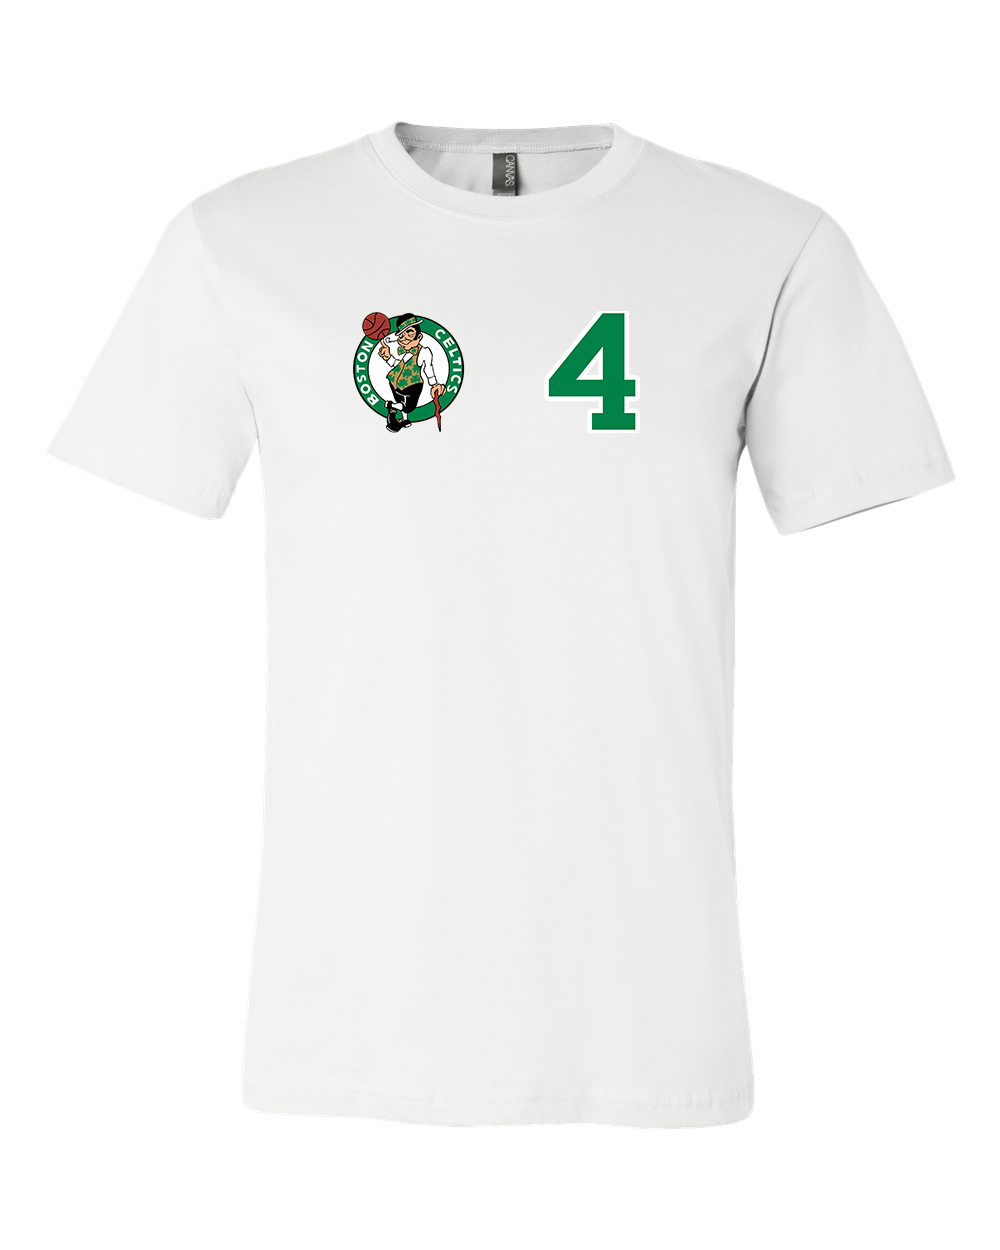 Isiah Thomas Boston Celtics NBA Jerseys for sale